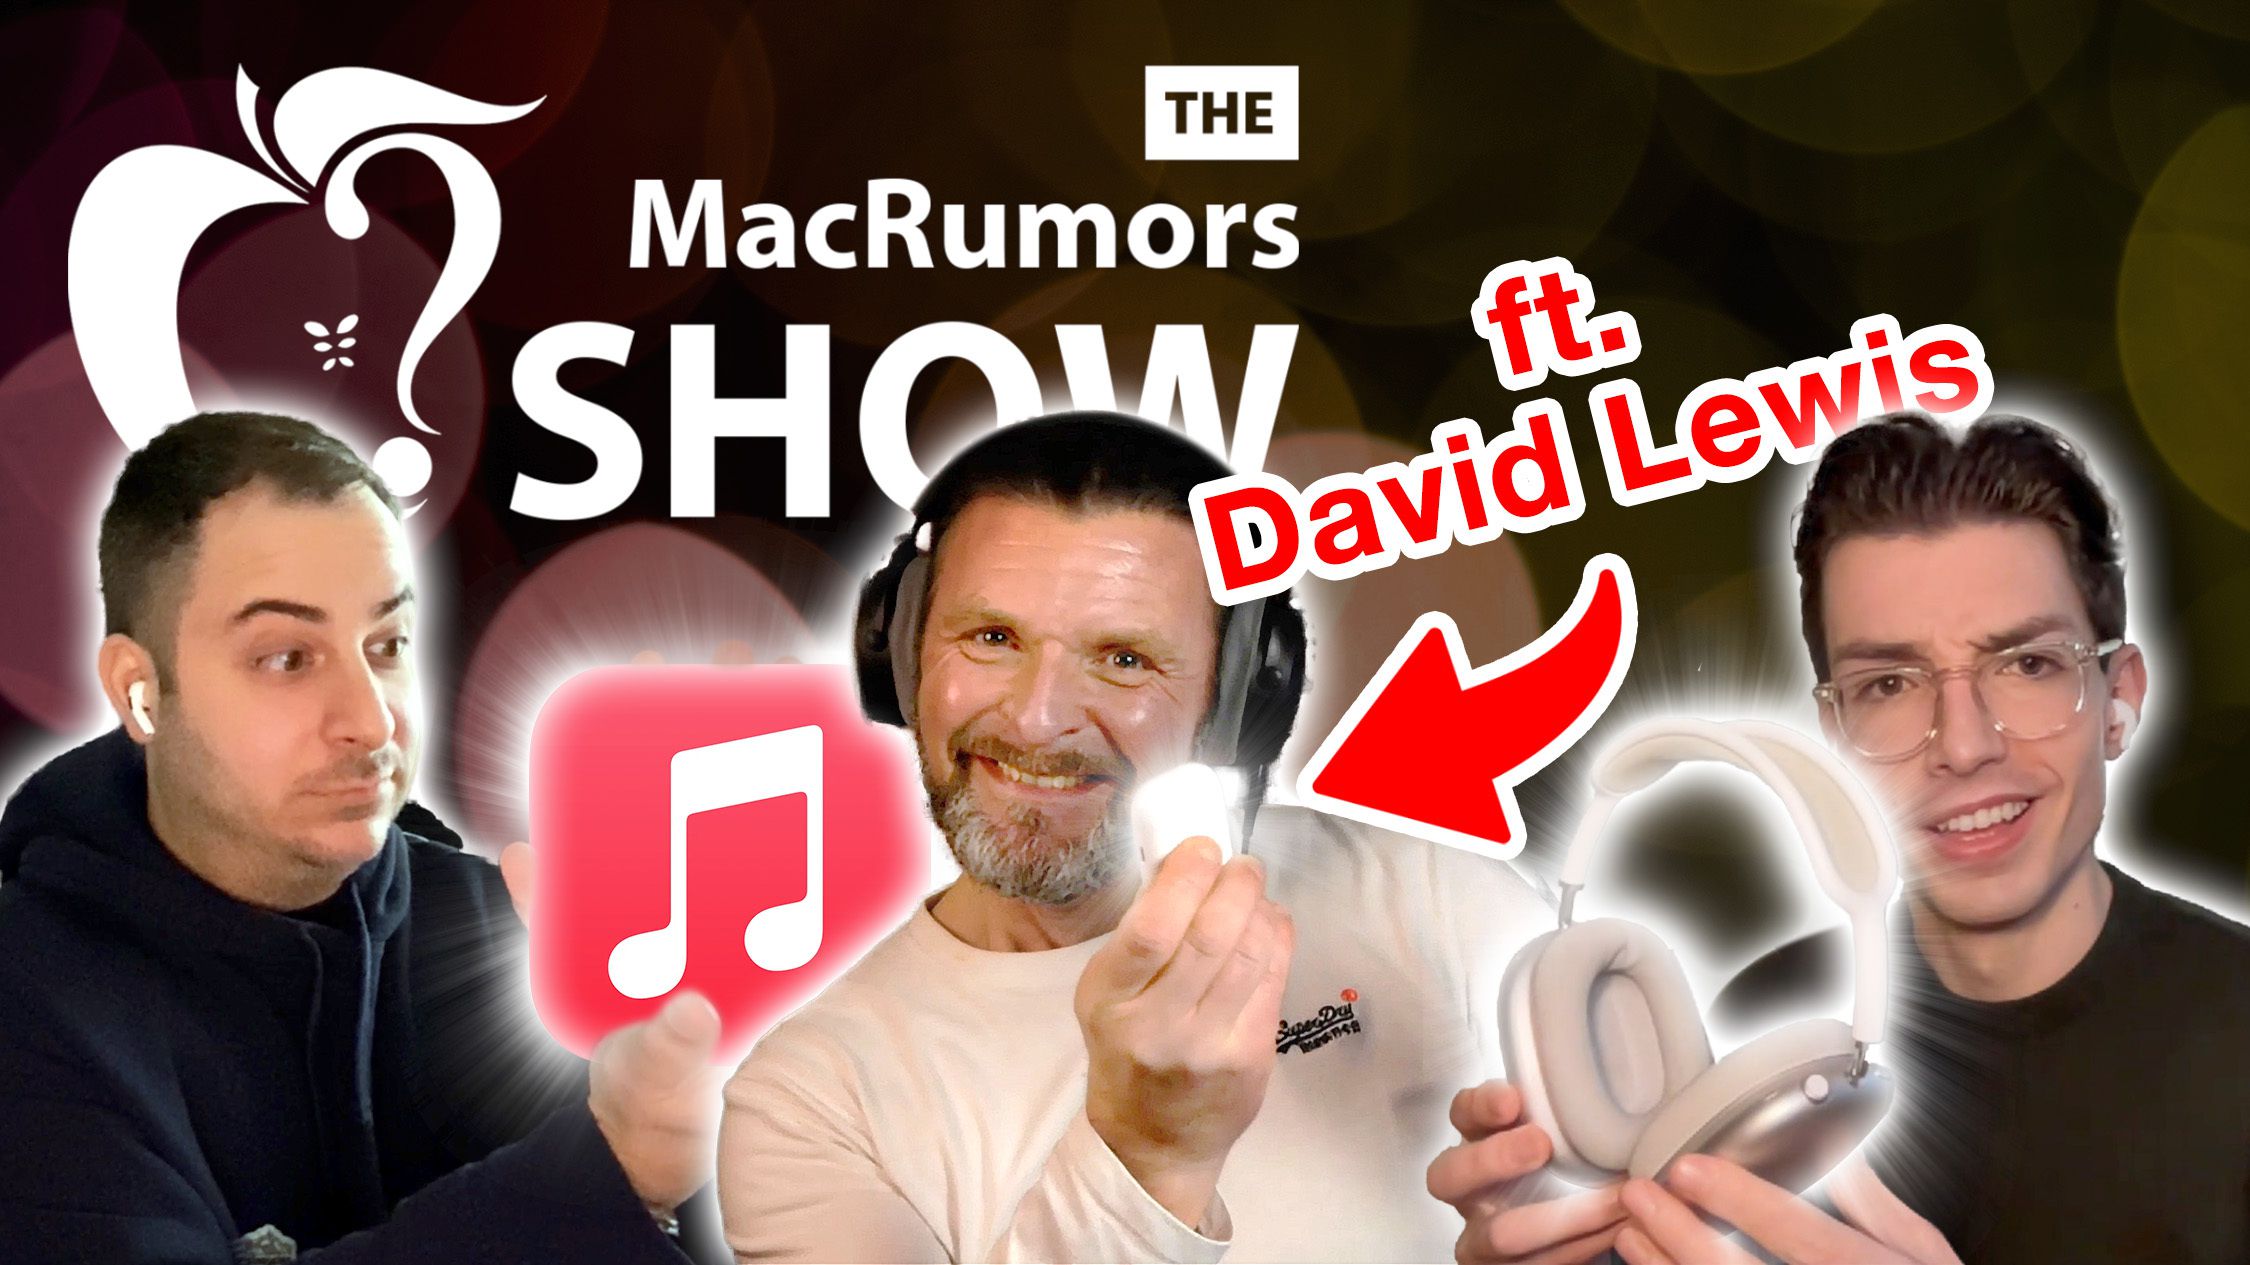 The MacRumors Show: David Lewis Talks AirPods, HomePod, and Apple Music in 2023 - macrumors.com